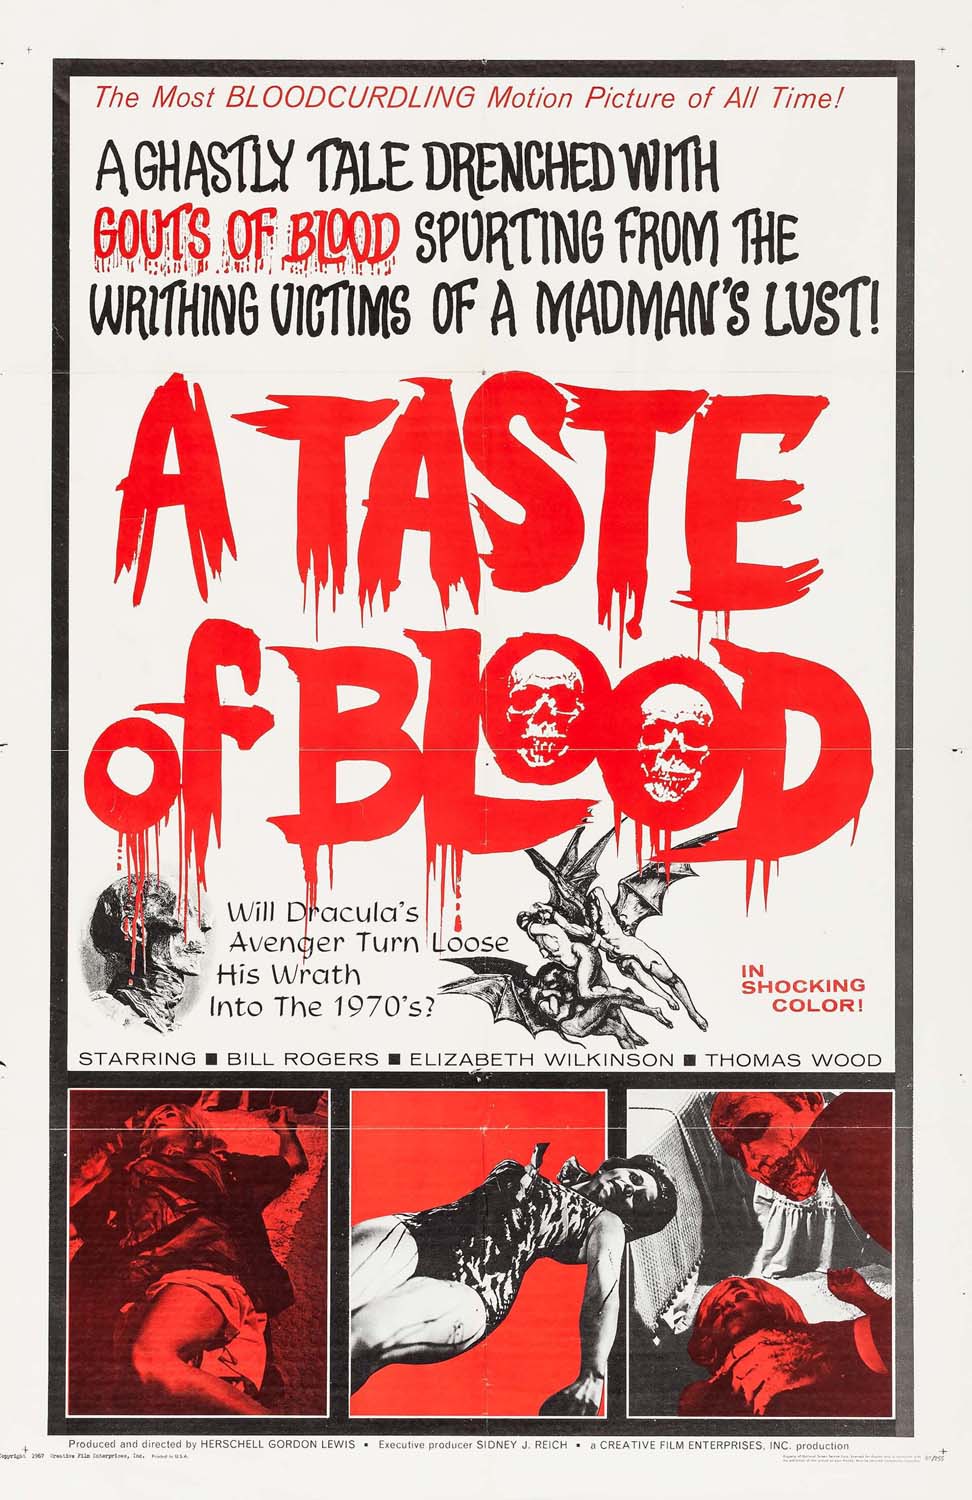 TASTE OF BLOOD, A